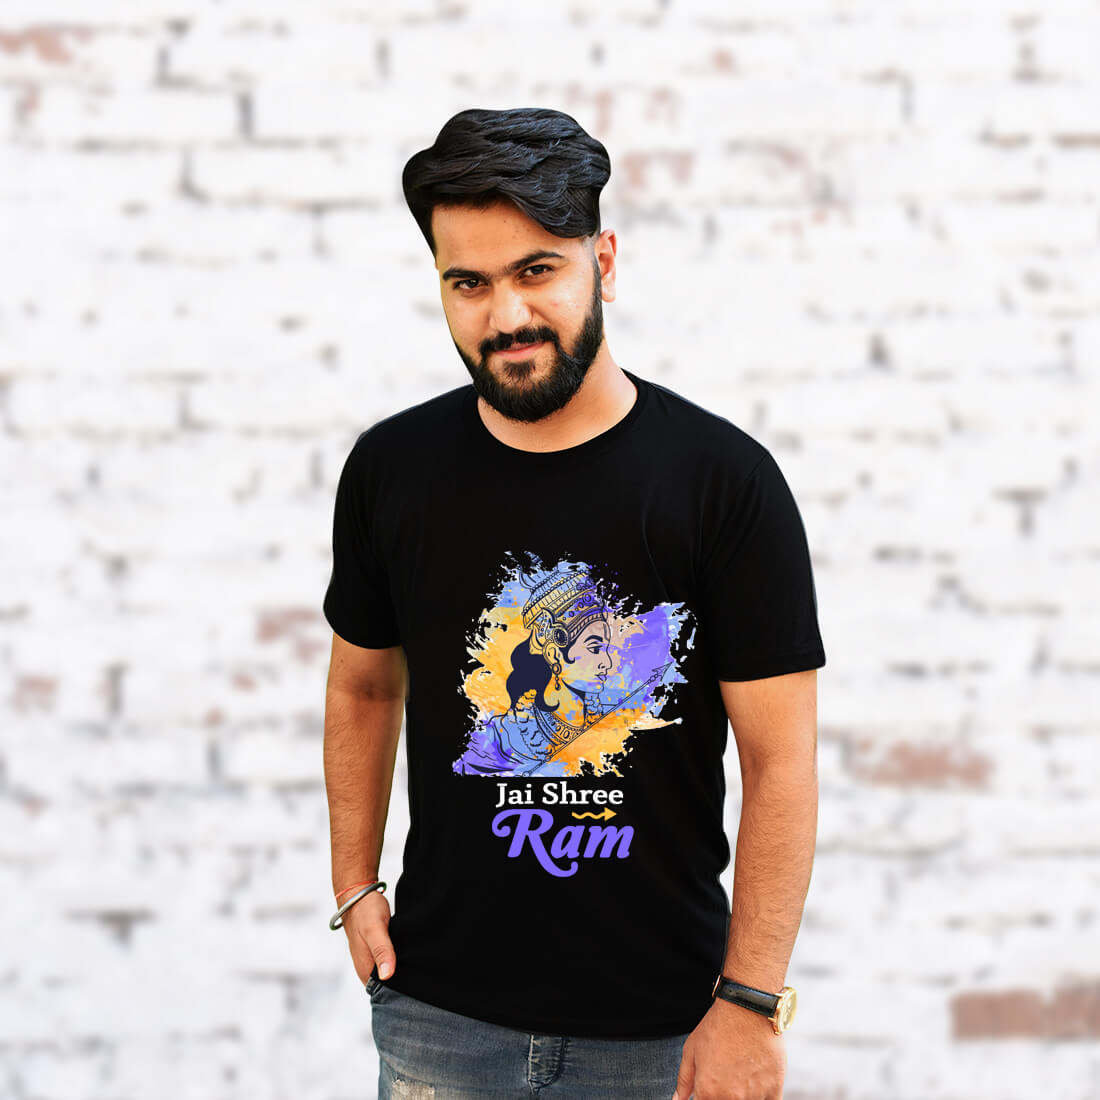 Jai Shree Ram Printed Black T-Shirt for Men